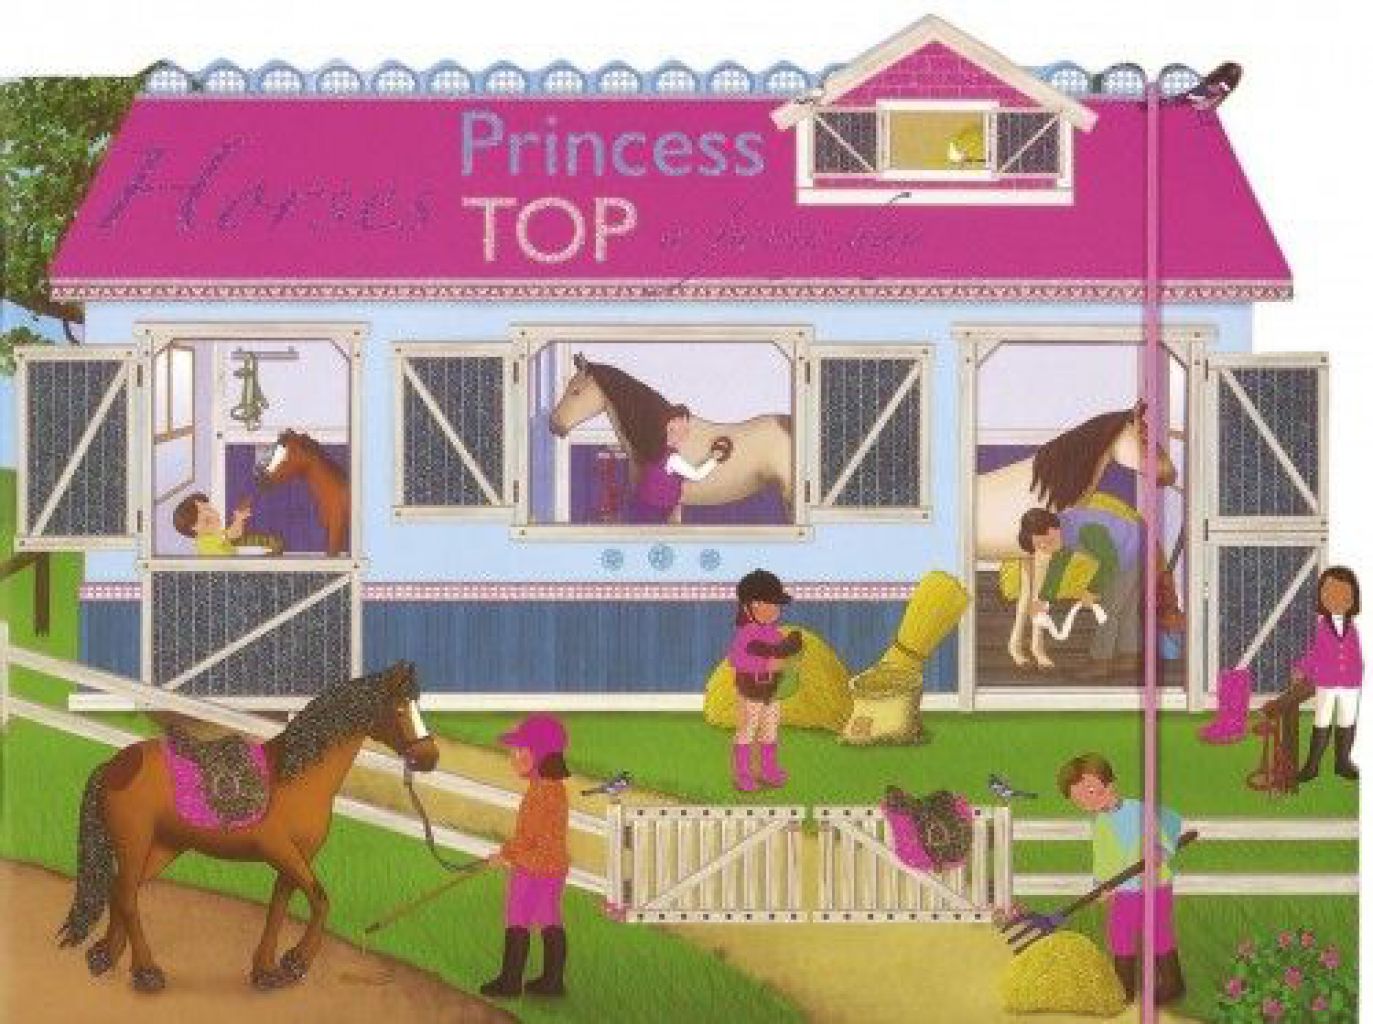 Princess TOP - Horses: a funny day (pink)